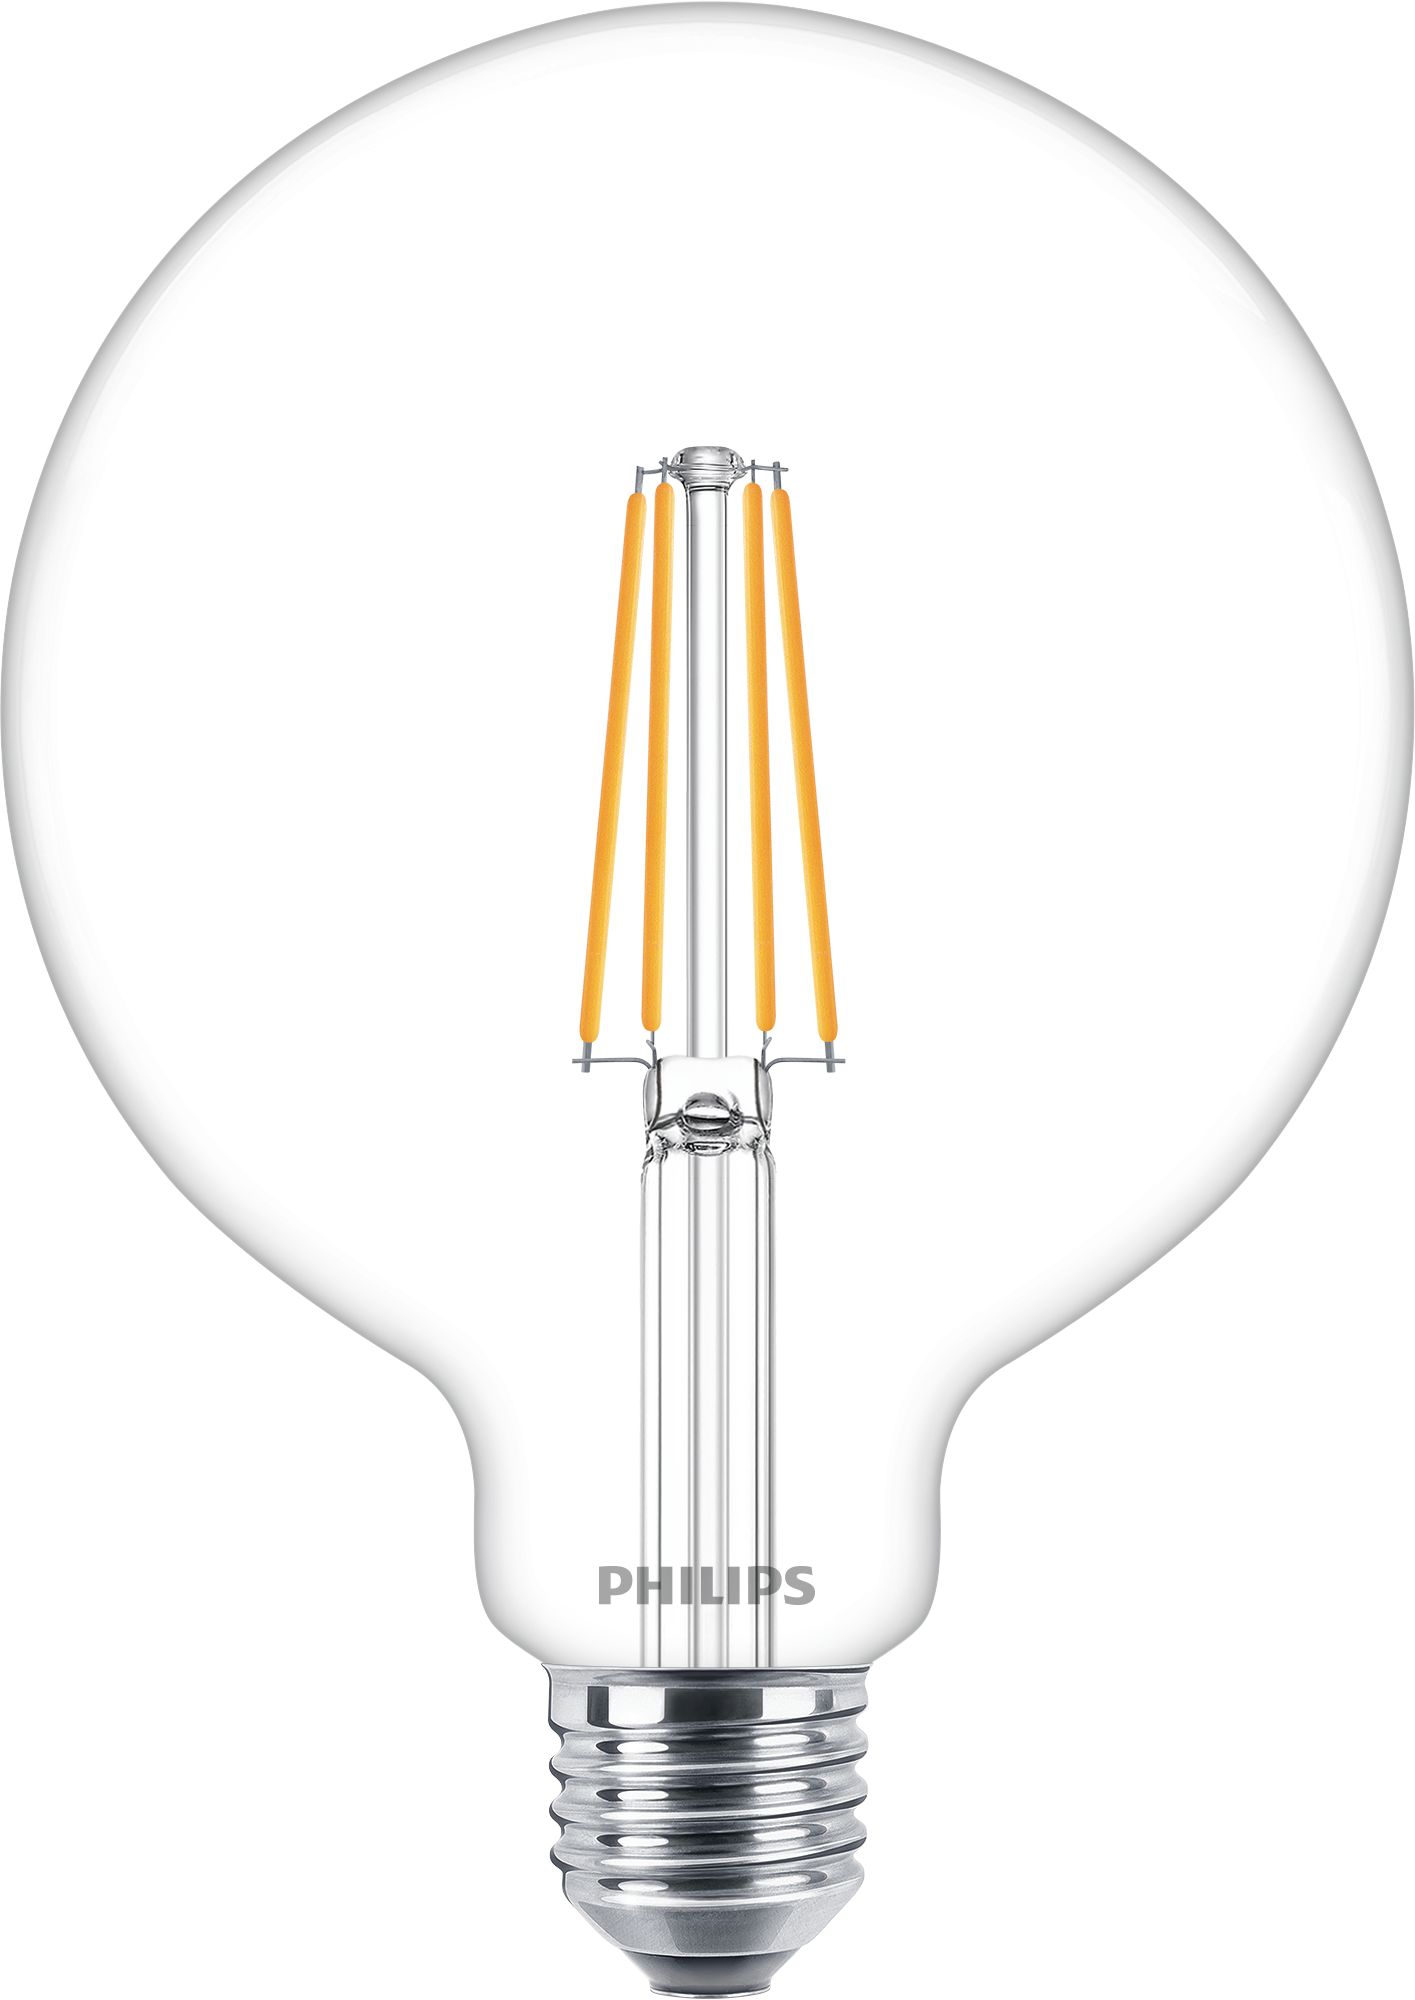 Philips Value LEDglobe Filament 5,9 Watt E27 927 2700 Kelvin warmweiss extra G120 klar dimmbar